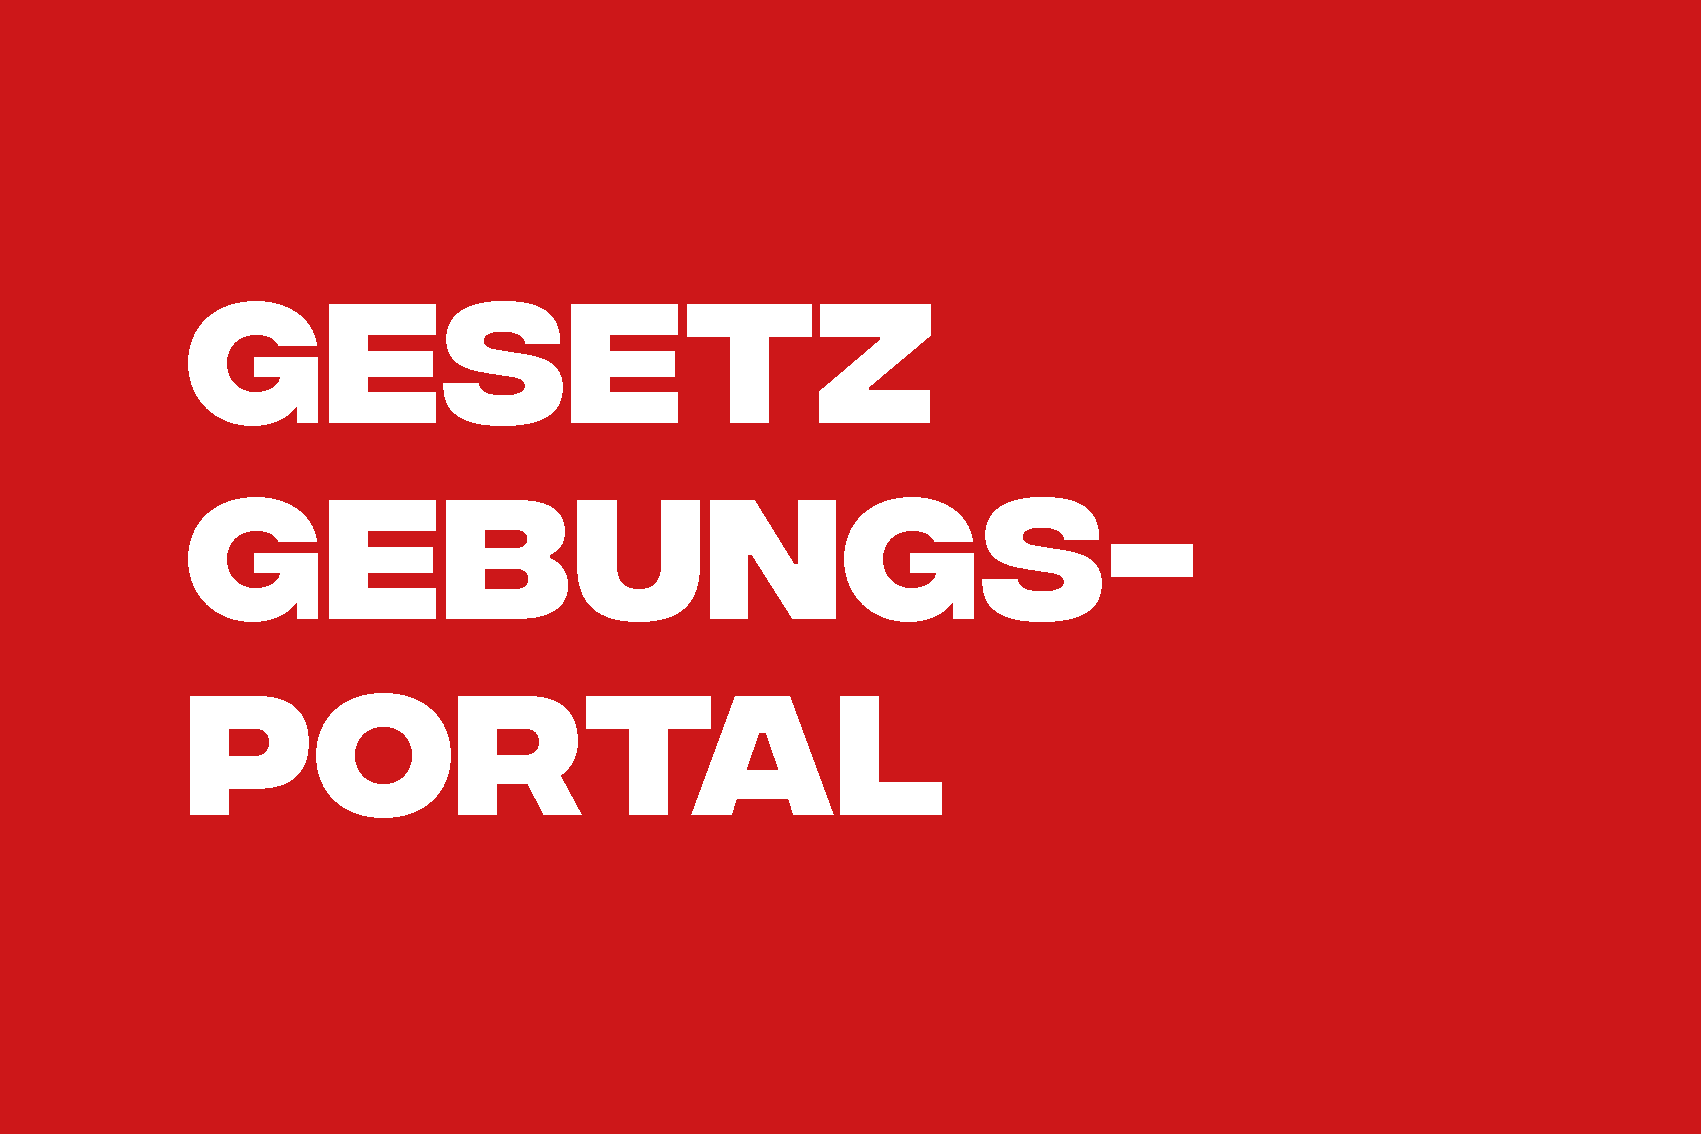 Vorarlberg transparent - Gesetzgebungs-Portal